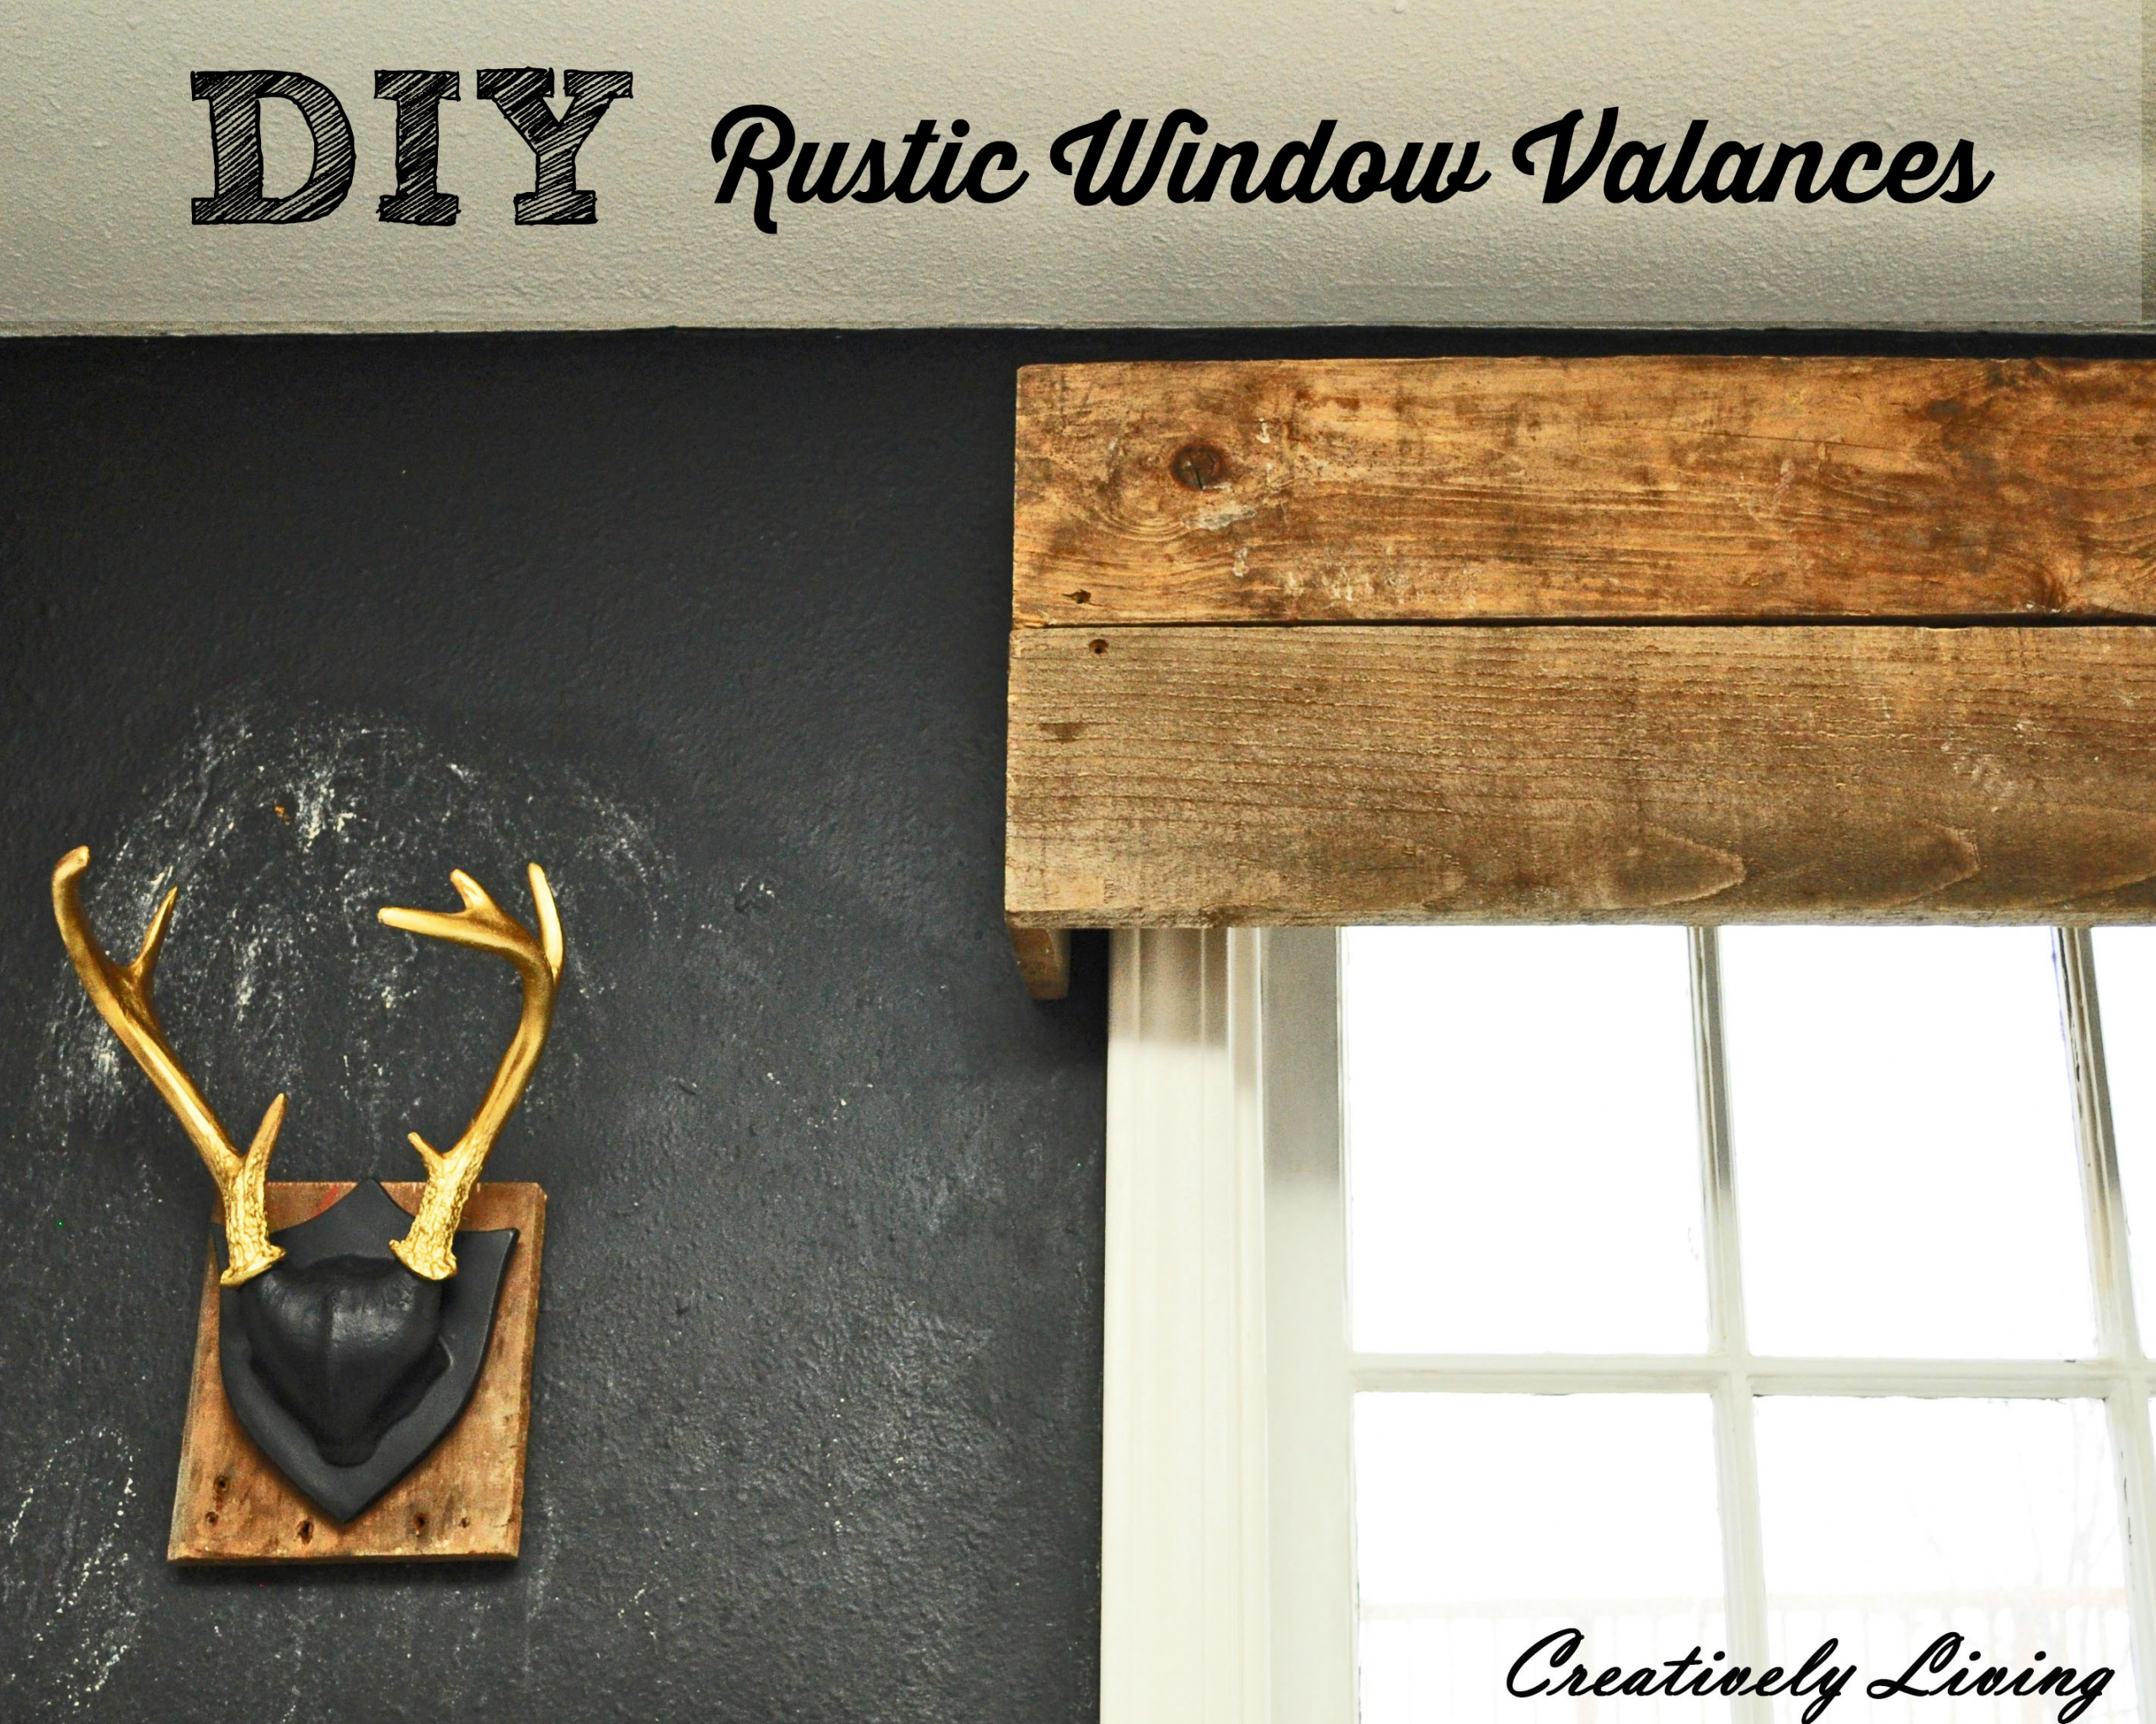 DIY Wooden Window Valance
 DIY Rustic Window Valances by Creatively Living Blog